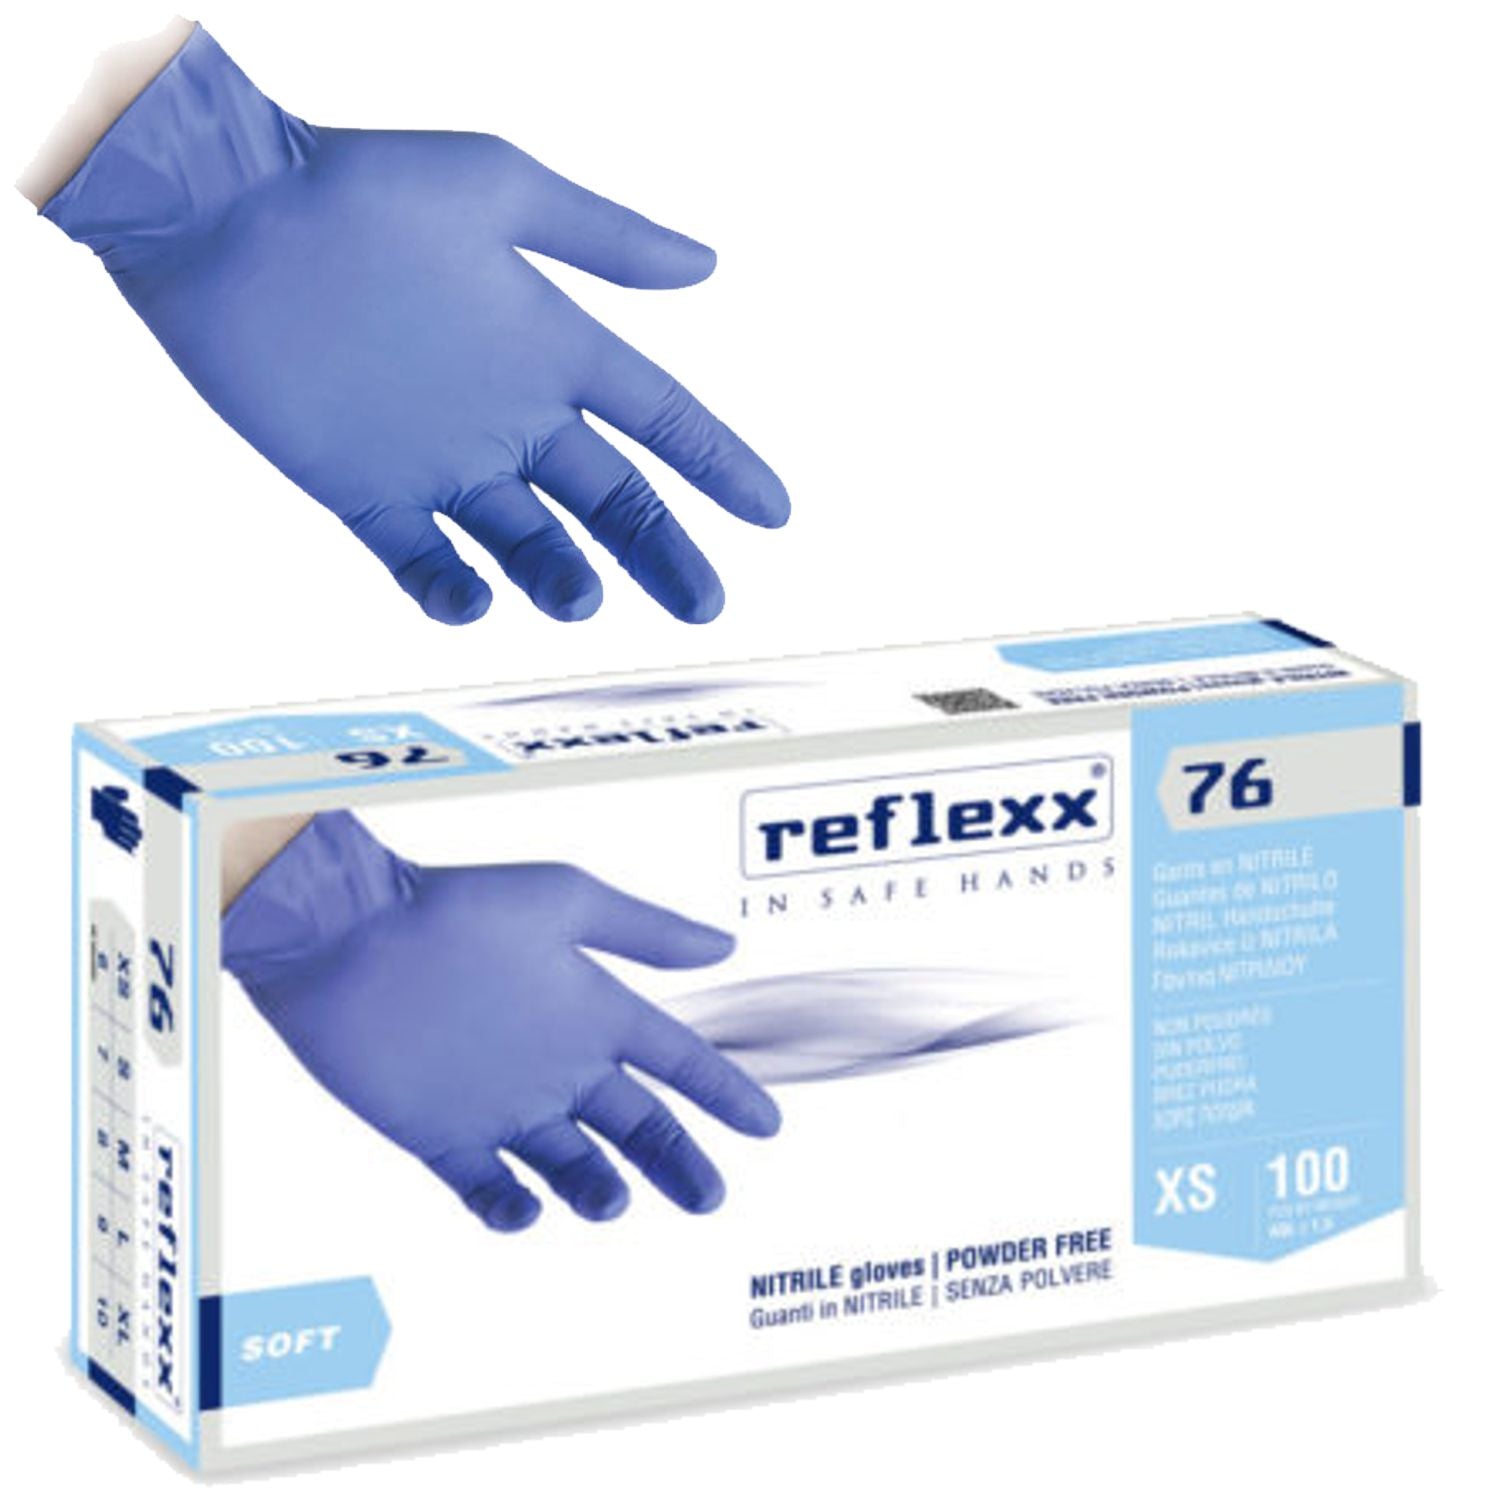 Reflexx 76 guanti monouso in nitrile